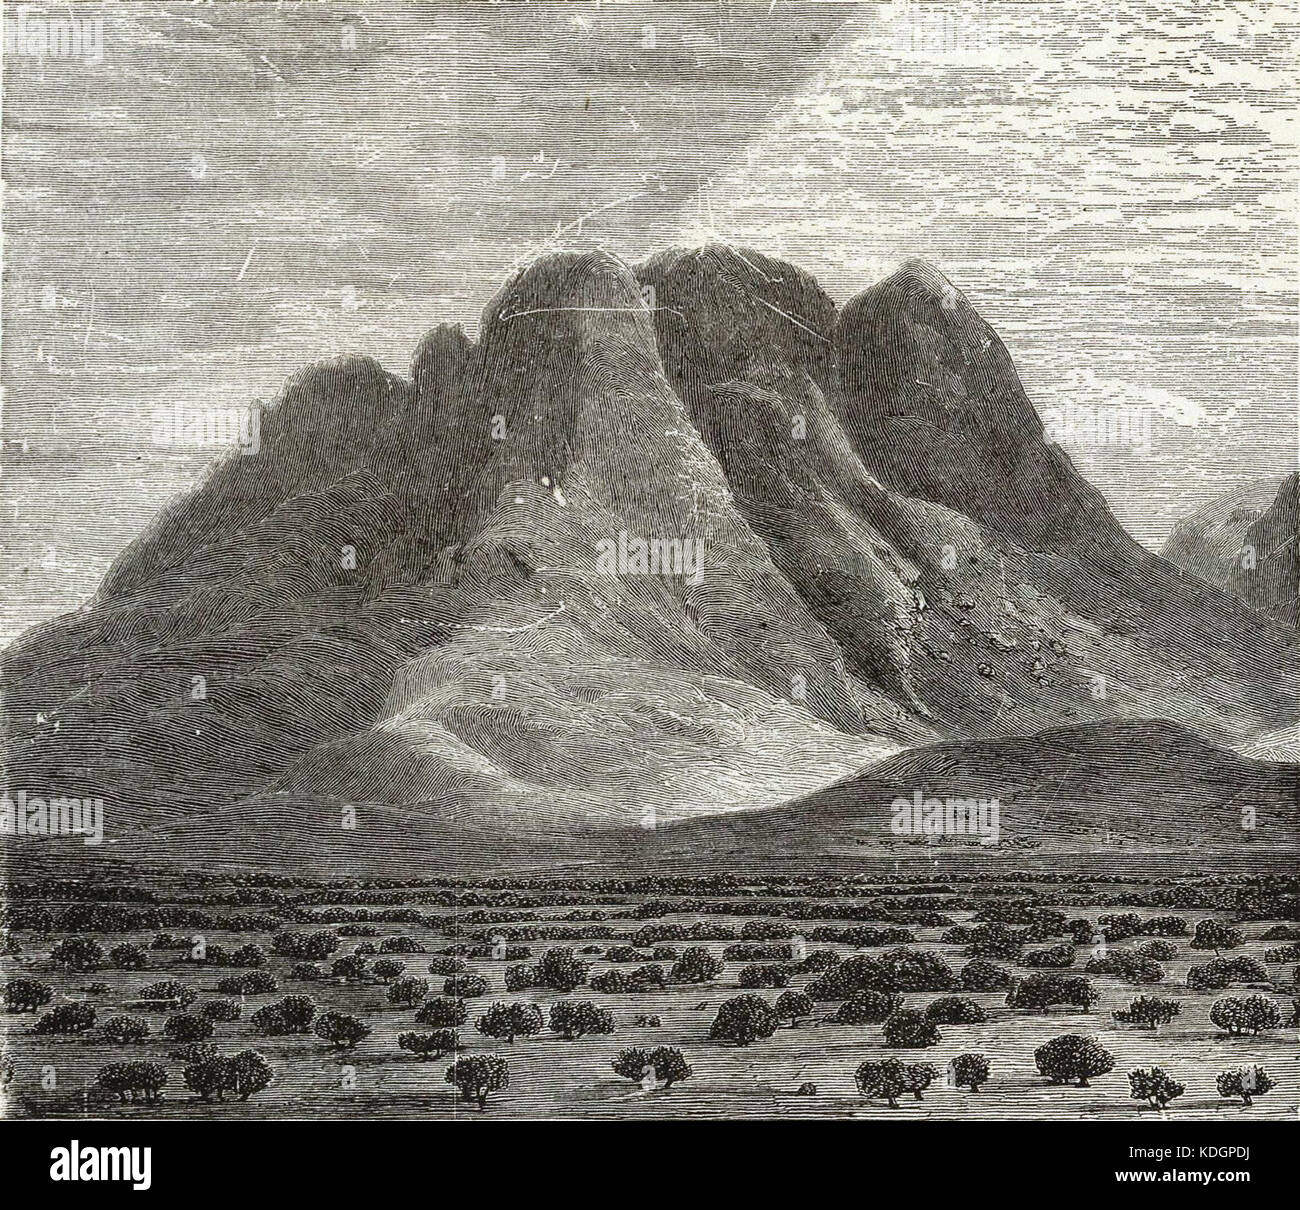 Jones, C.H.; Hamilton, T.H.; Williams, J.David. 1873. Mount Sinai Stock Photo